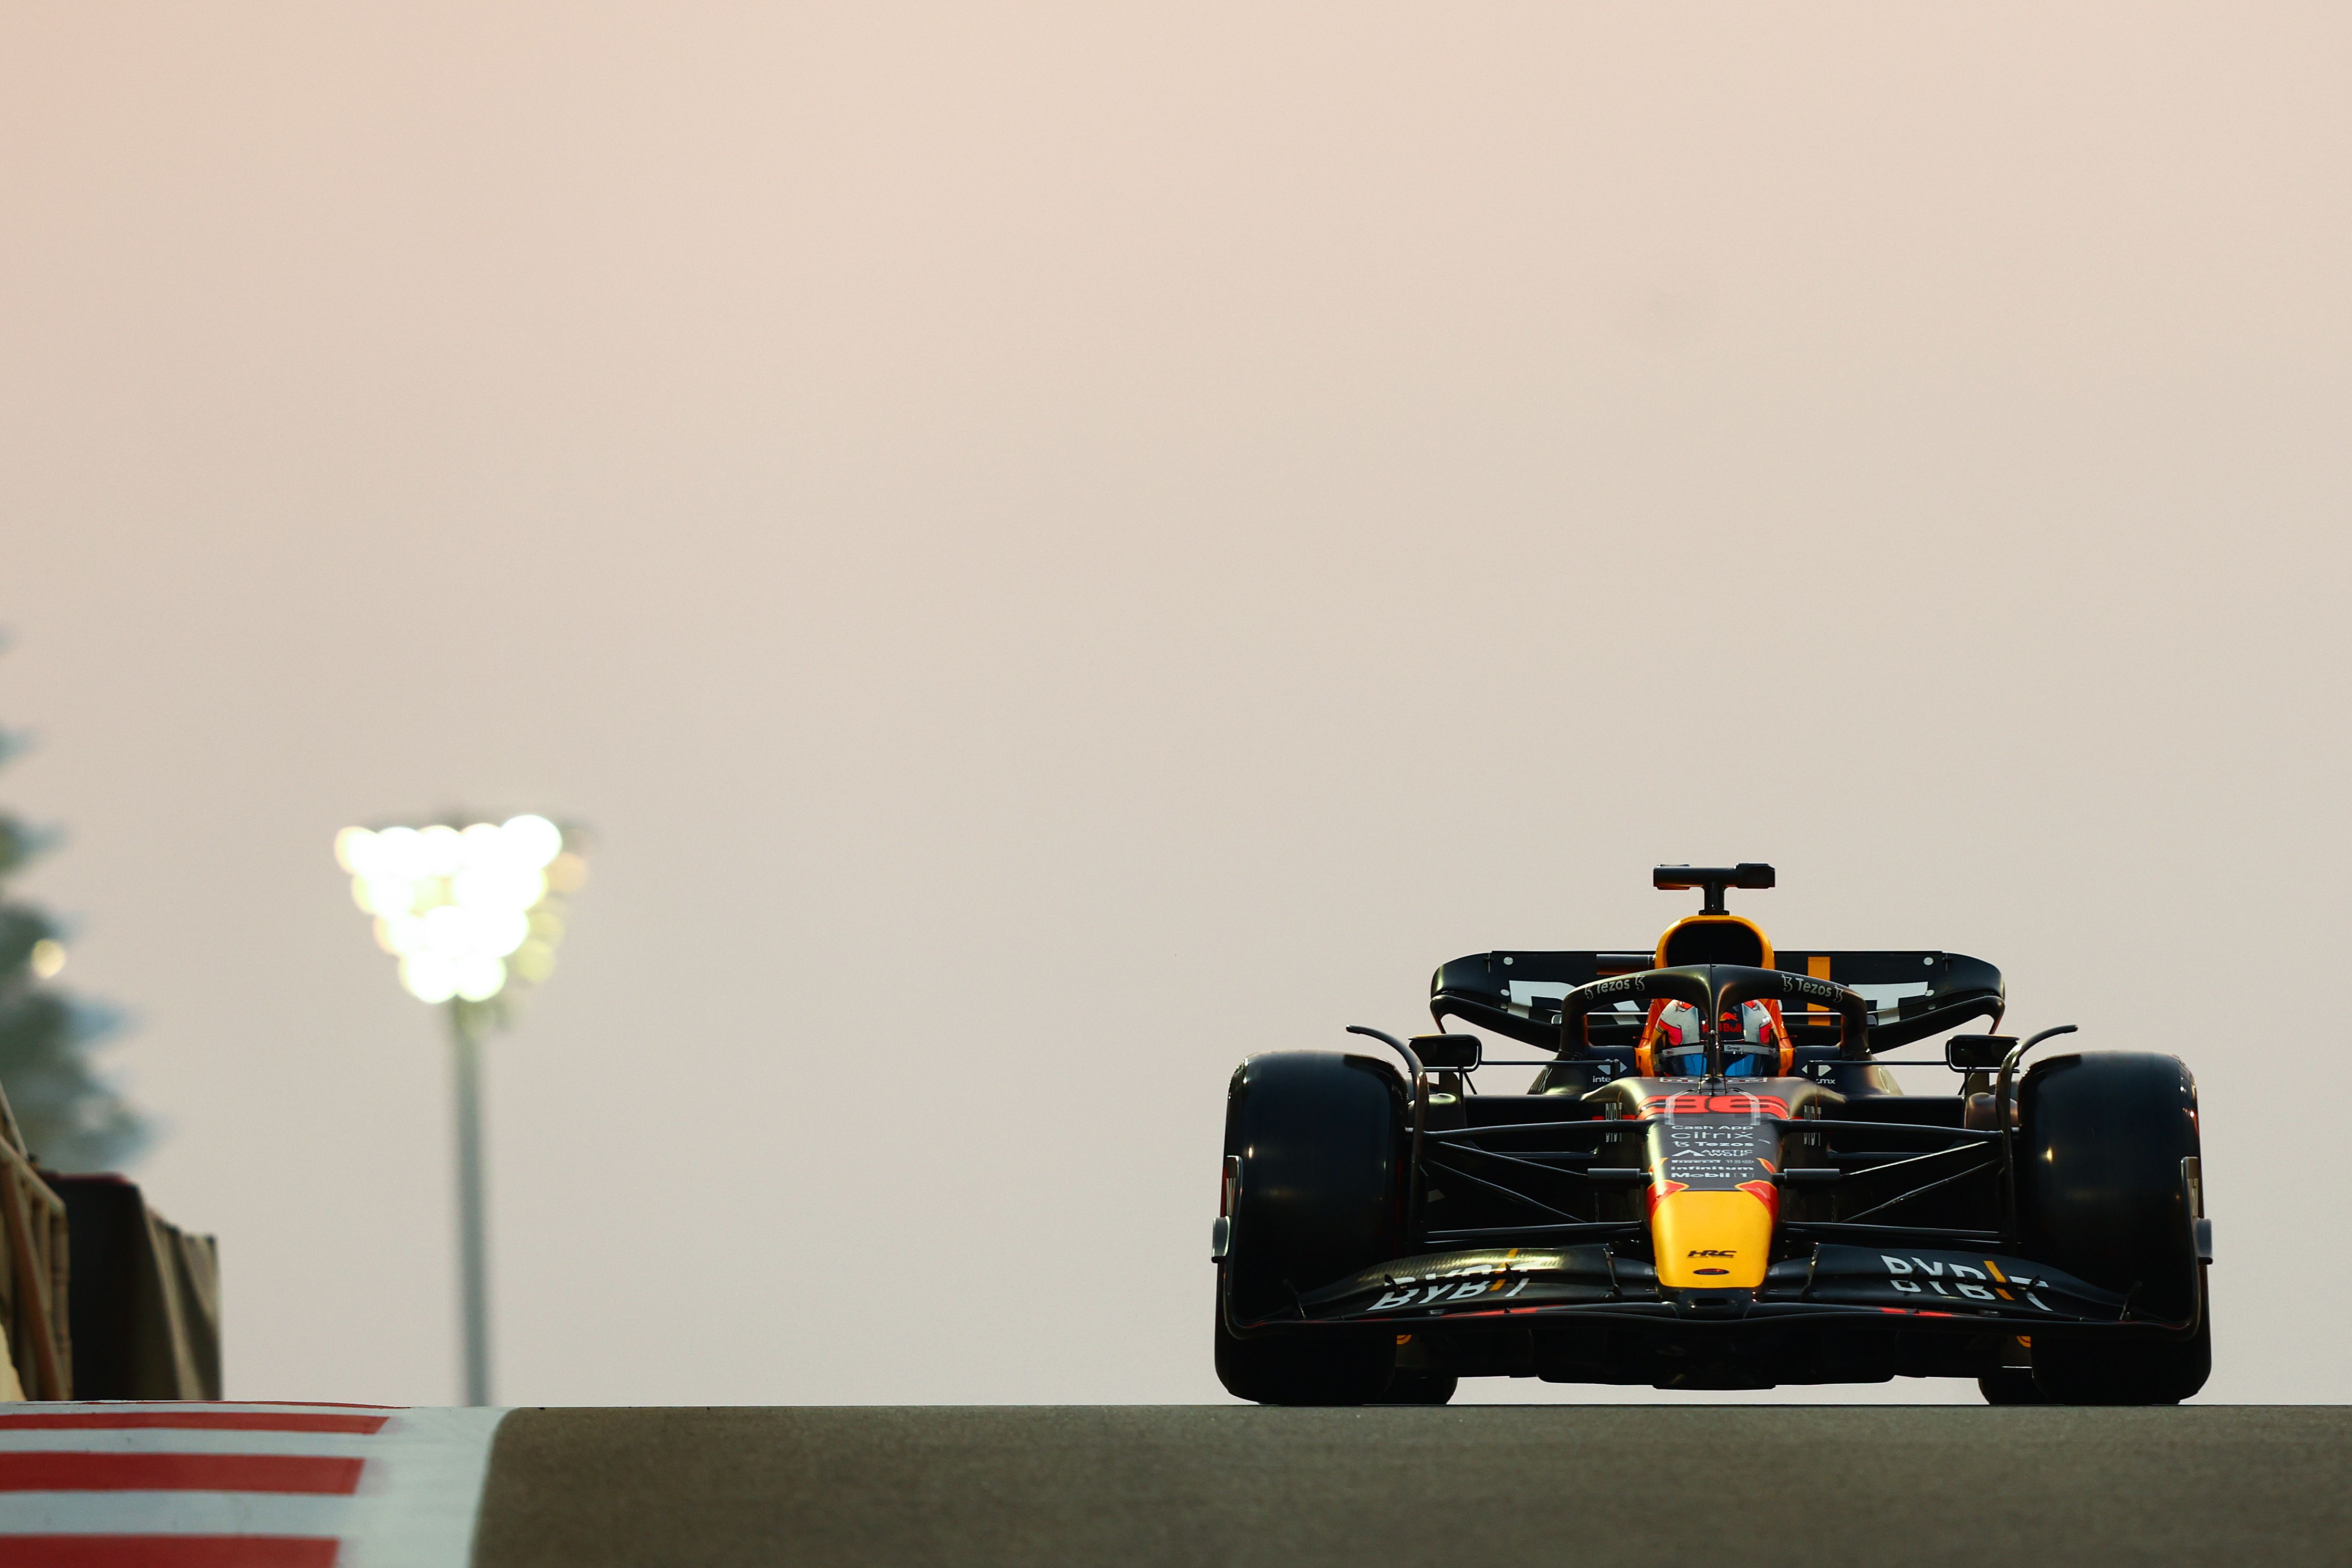 Liam Lawson drives the Red Bull in Abu Dhabi testing